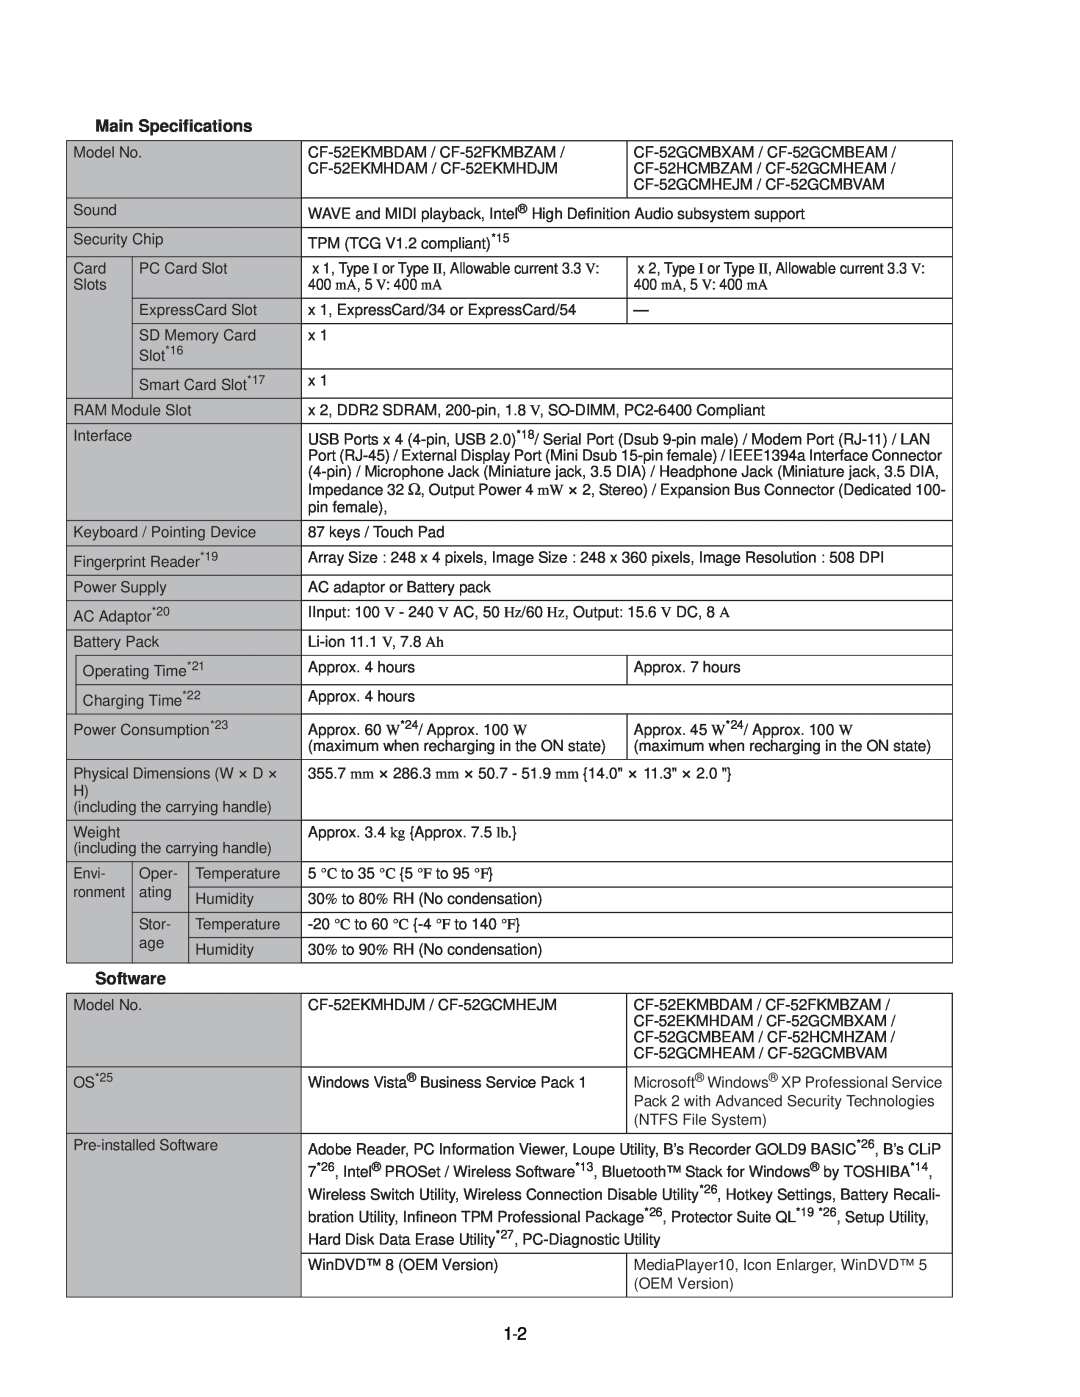 Panasonic CF-52EKM 1 D 2 M service manual Main Specifications, Software, OS*25 